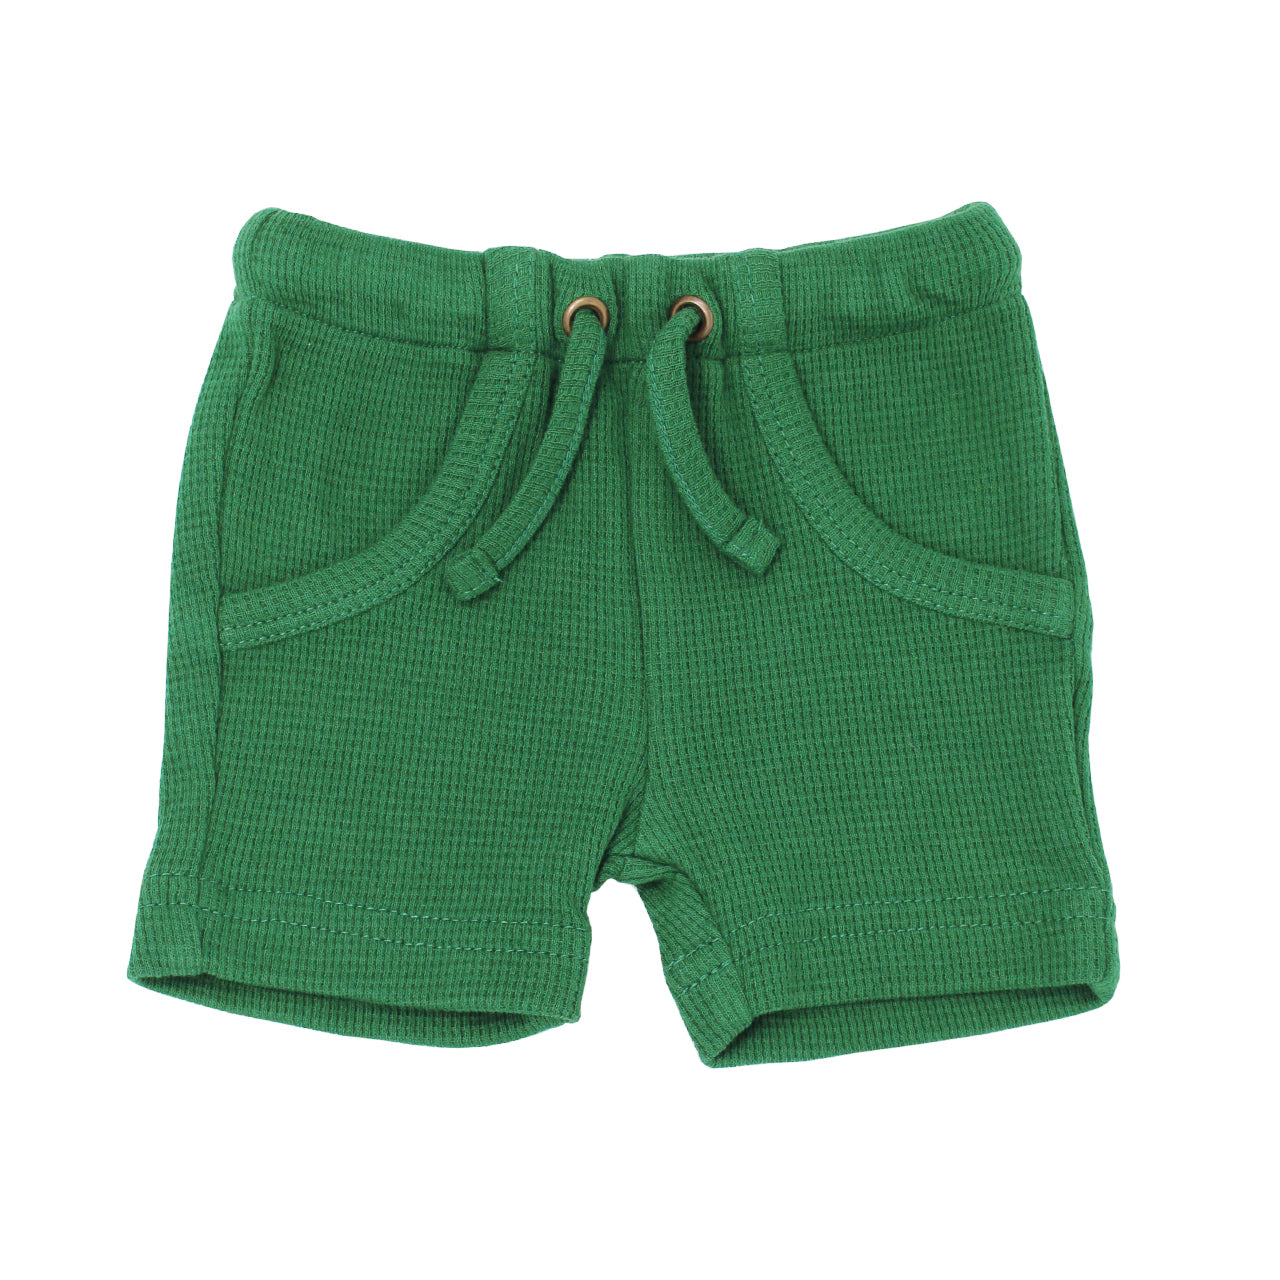 Organic Thermal Kids' Bike Shorts in Emerald, Flat